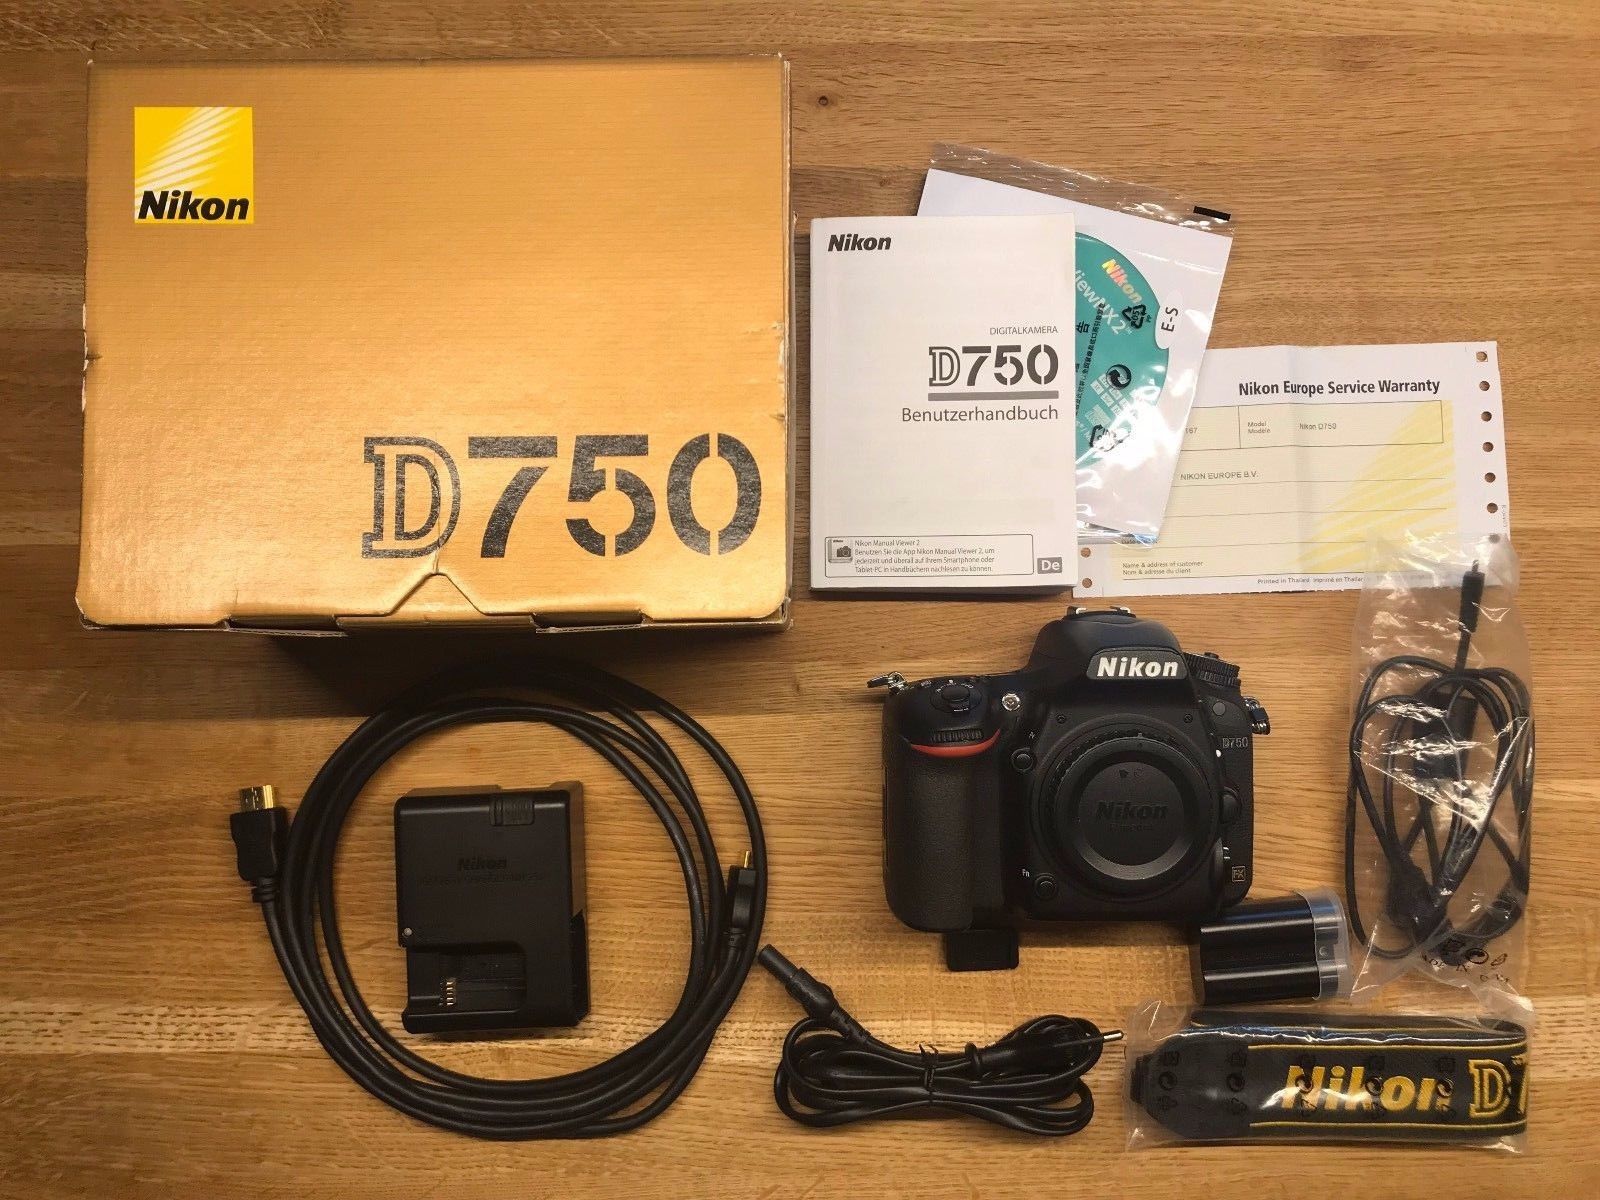 Nikon D D750 24.3 MP SLR-Digitalkamera - Schwarz (Nur Gehäuse) (so gut wie neu!)